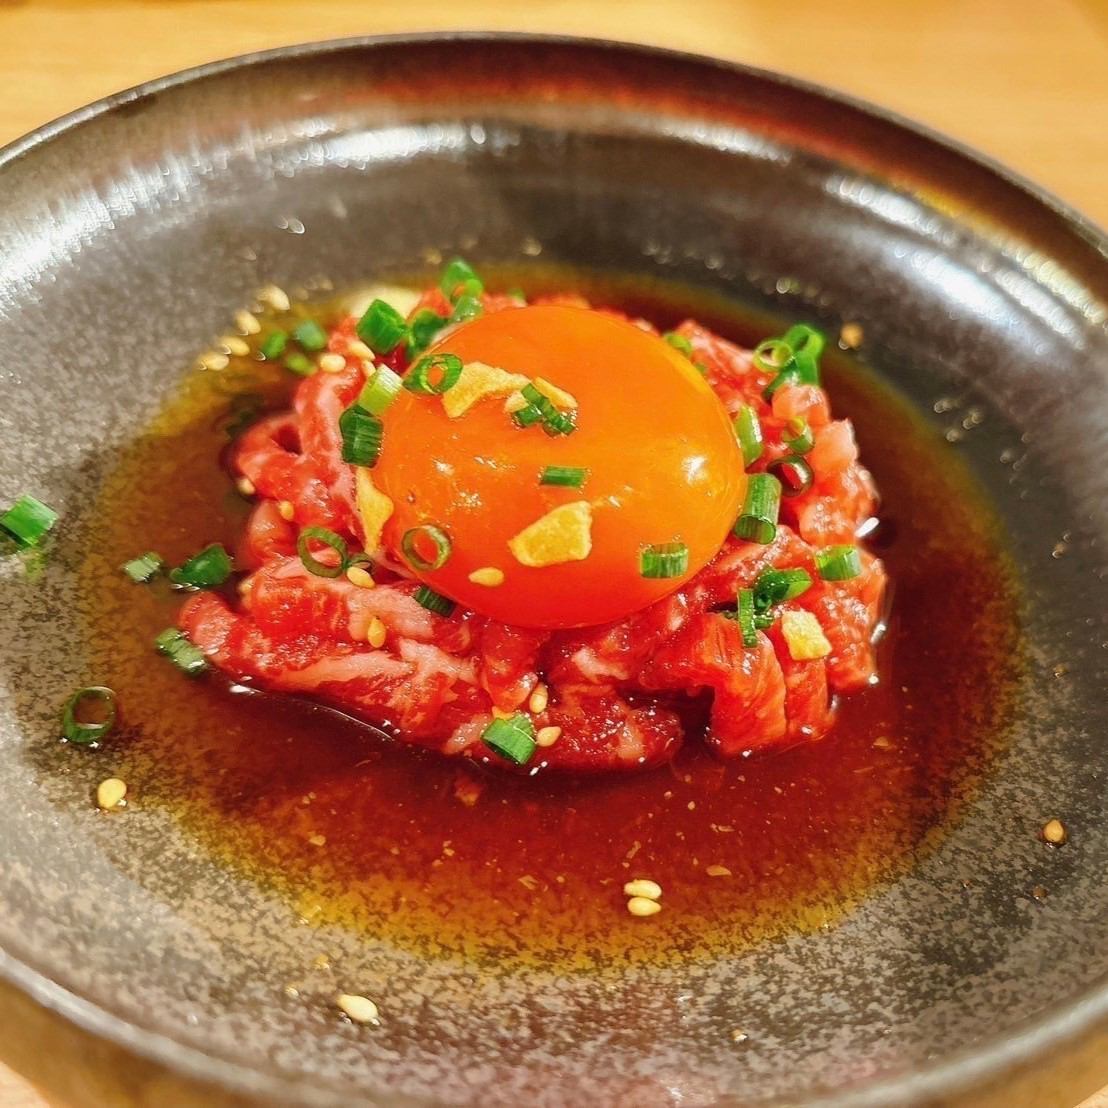 ◇ High-quality Japanese black beef at a reasonable price ◇ If you want to eat yakiniku in Jingu Marutamachi, try Nikumon★